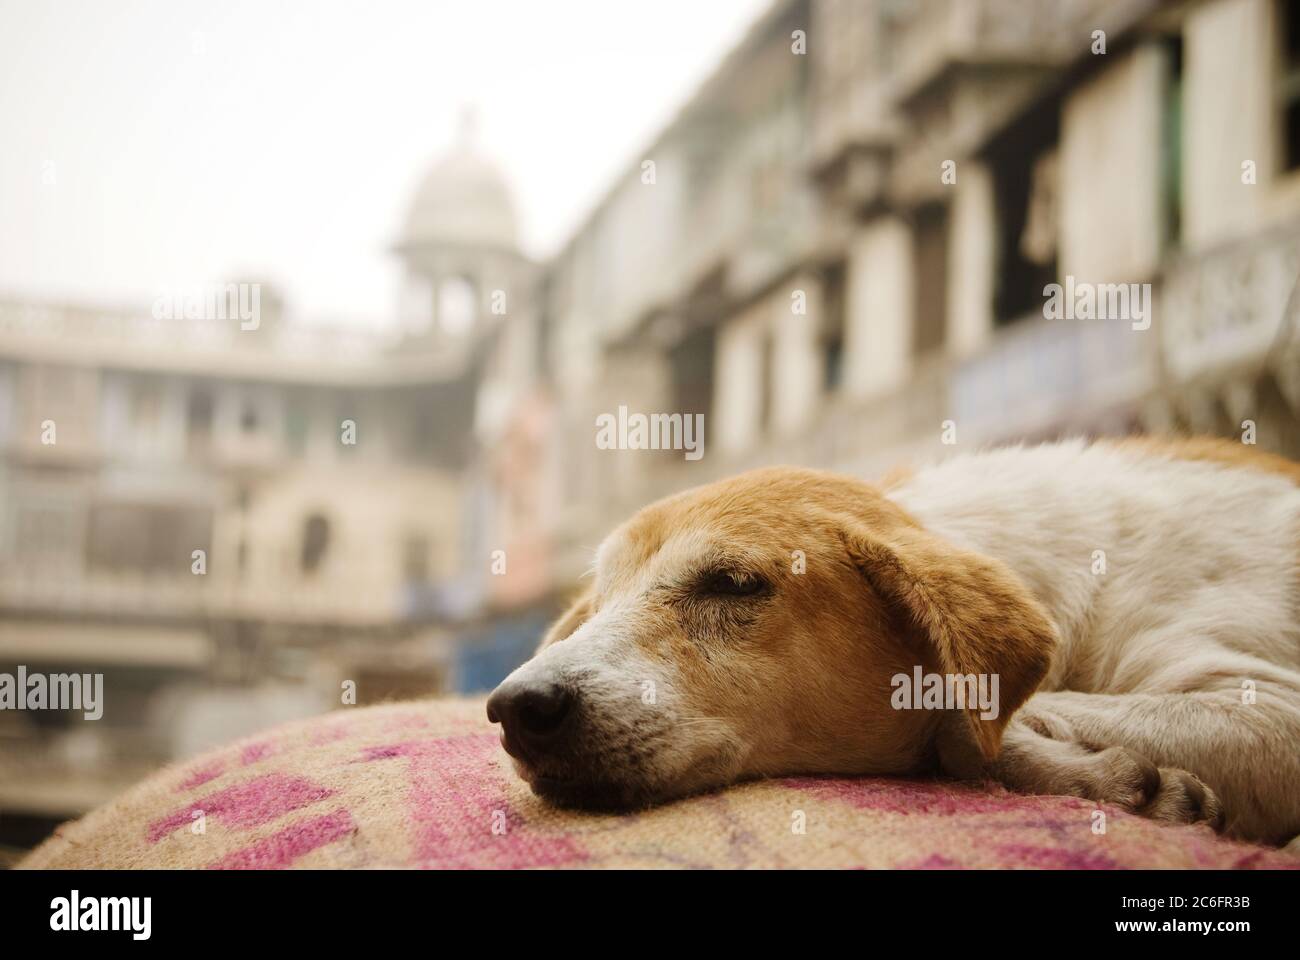 Dog sleeping on a burlap sack in the spice market, Delhi, India Stock Photo